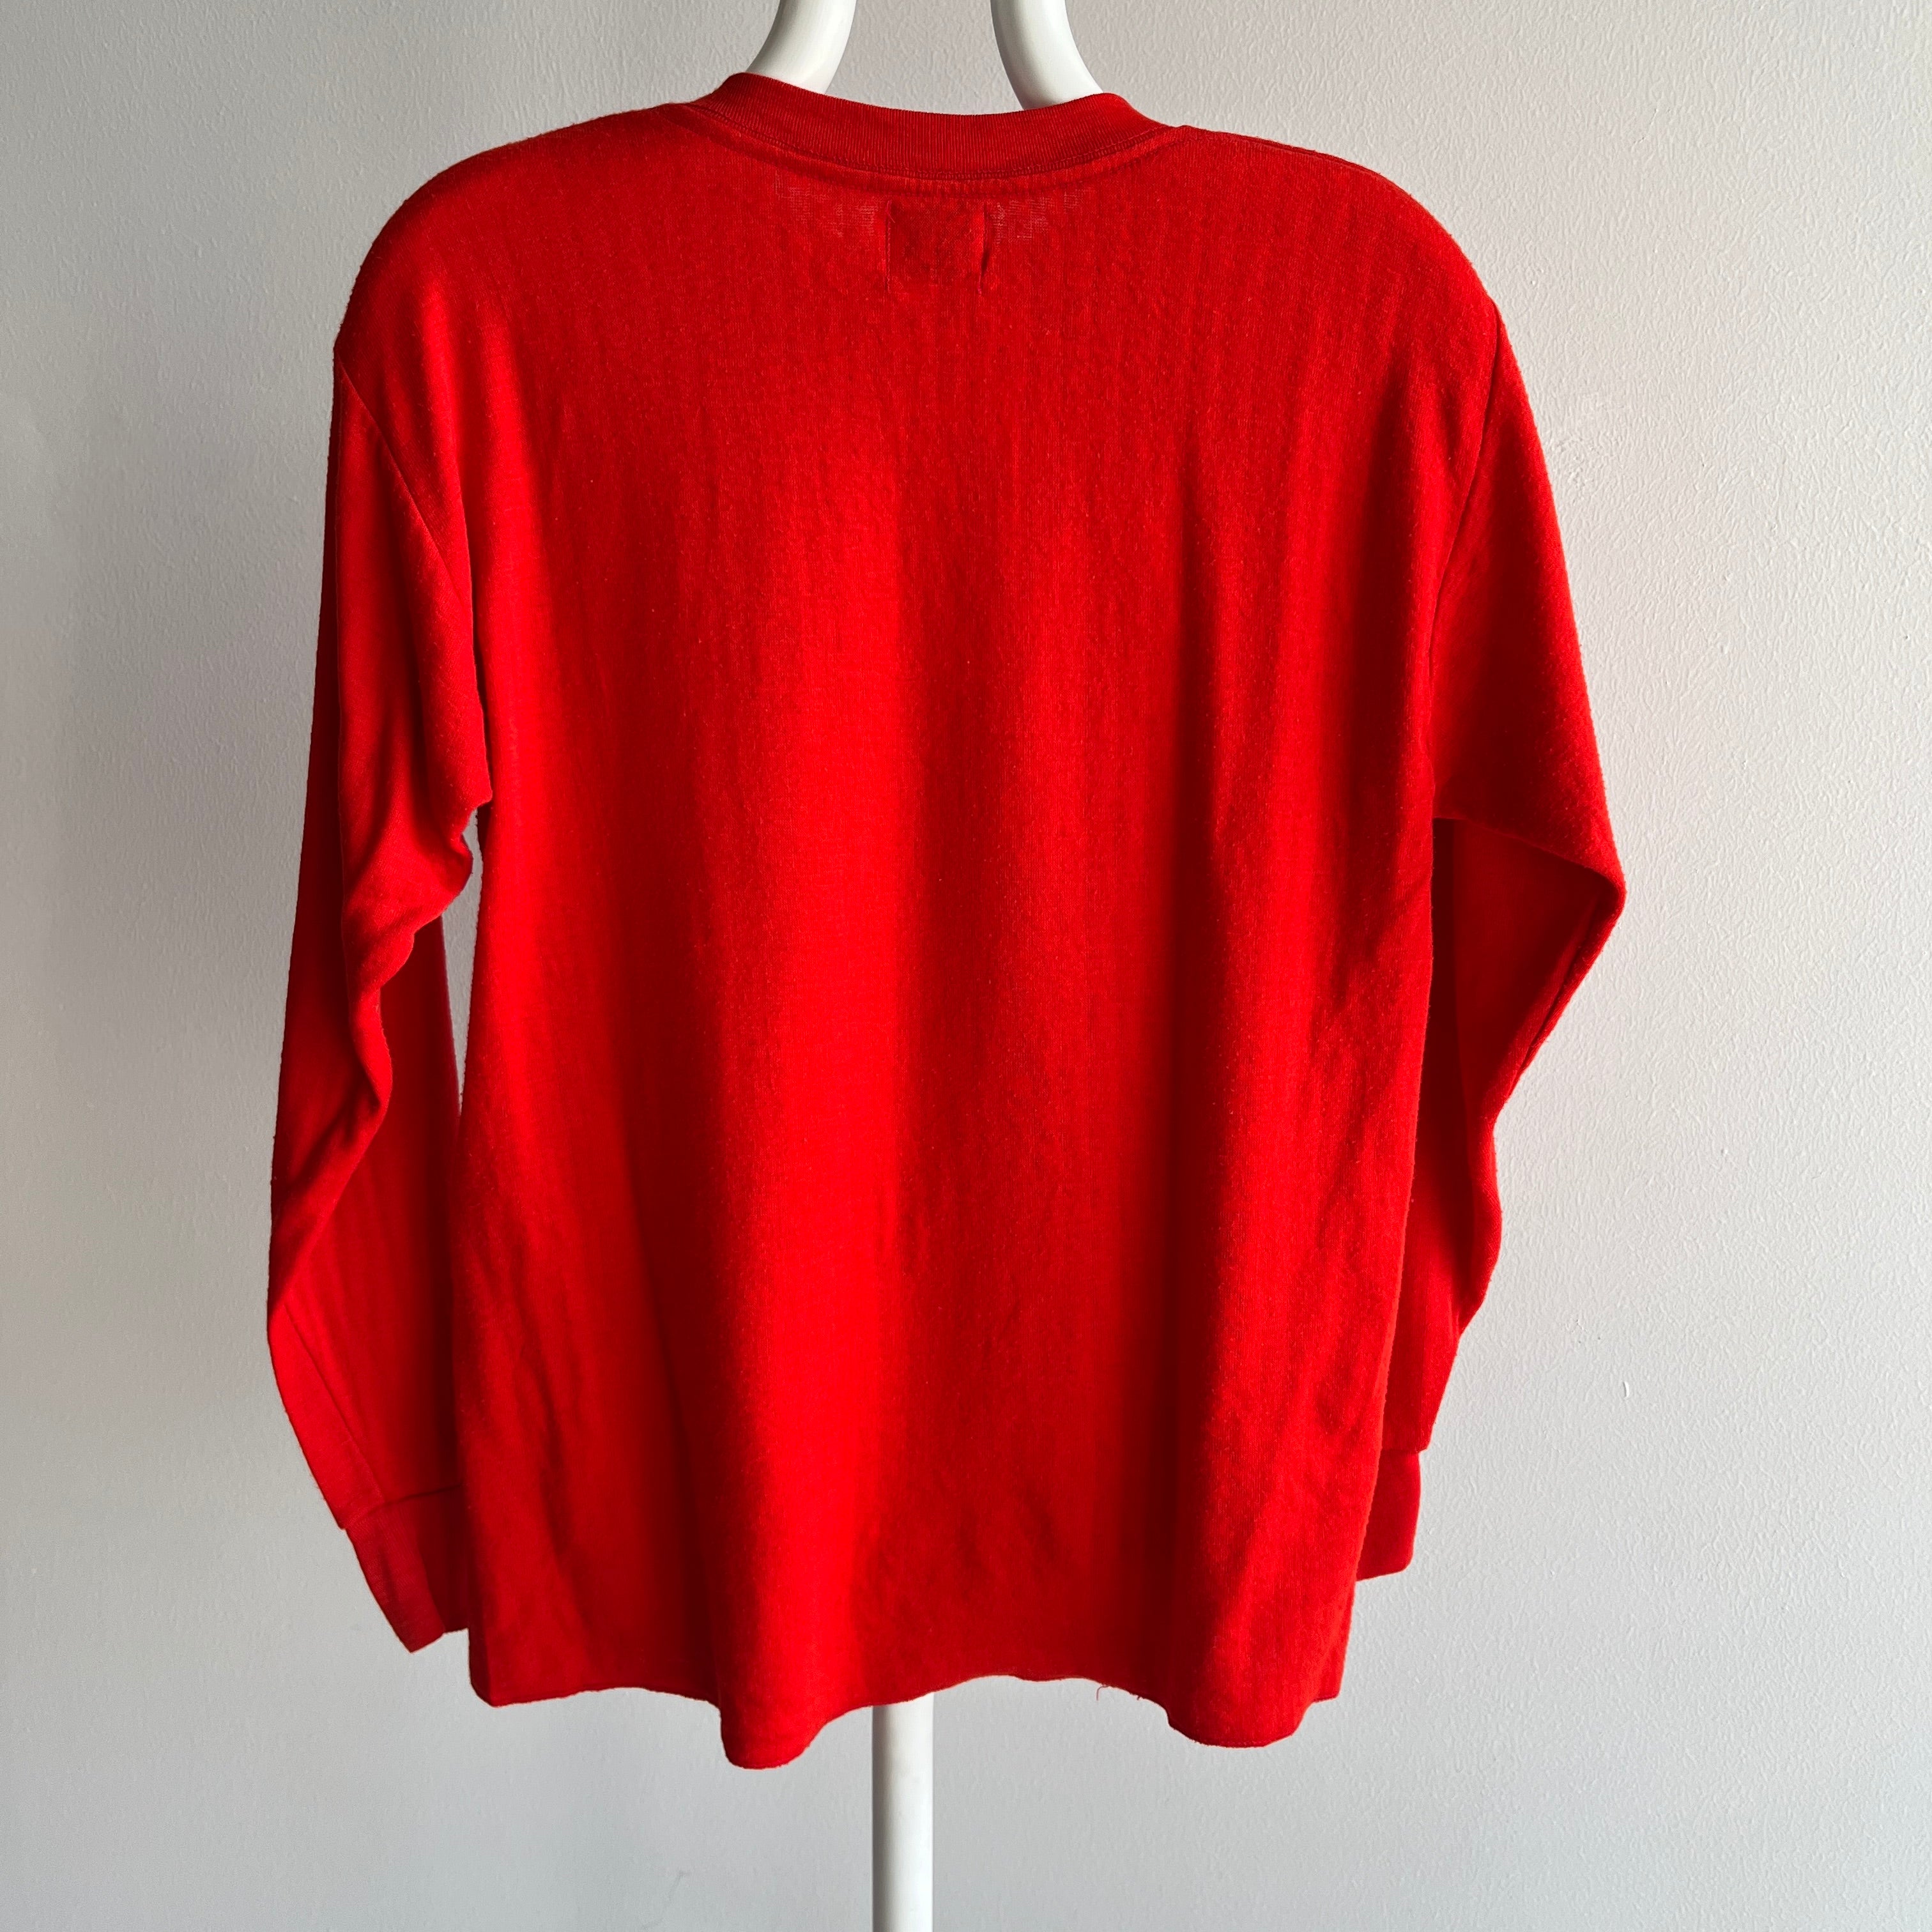 1970/80s Hunderwear by Browning Vibrant Orange/Red Long John's Super Soft Shirt